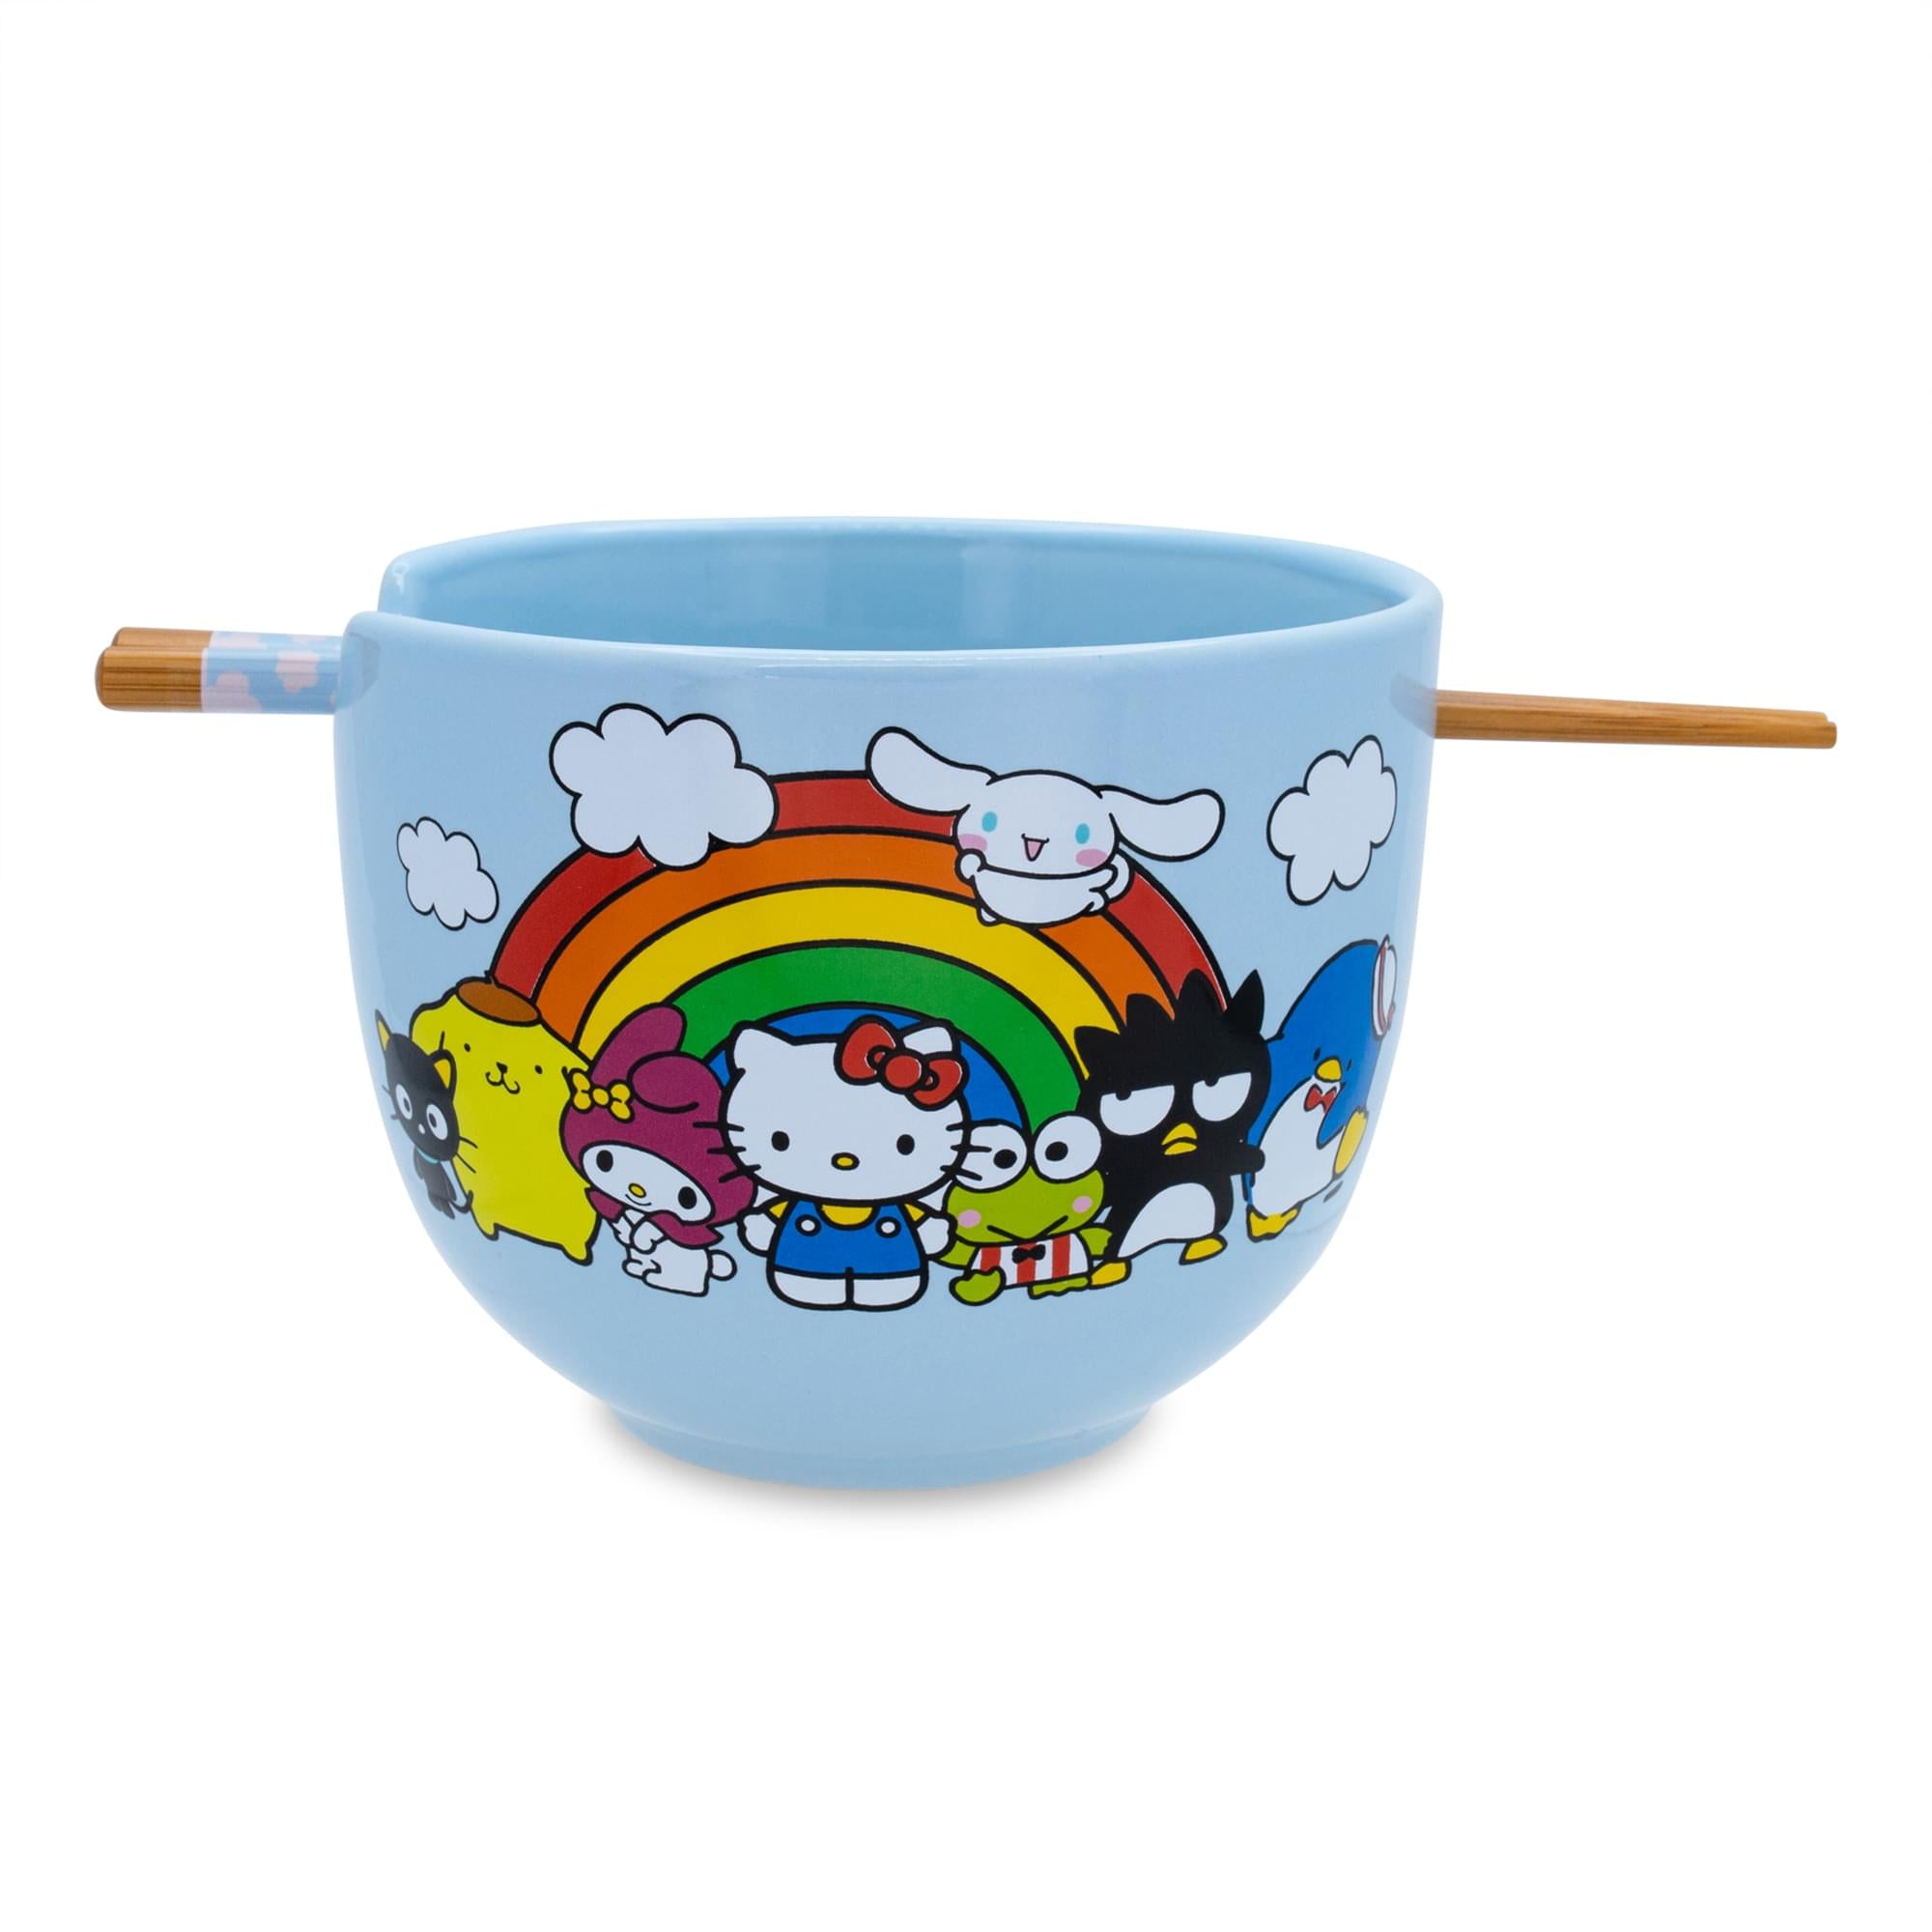 Anime One Piece Ramen Bowl Set with Chopsticks Straw Hat Ceramic Ramen Bowl  Set Merchandise Fans Gifts, Dishwasher & Microwave Safe (yellow)